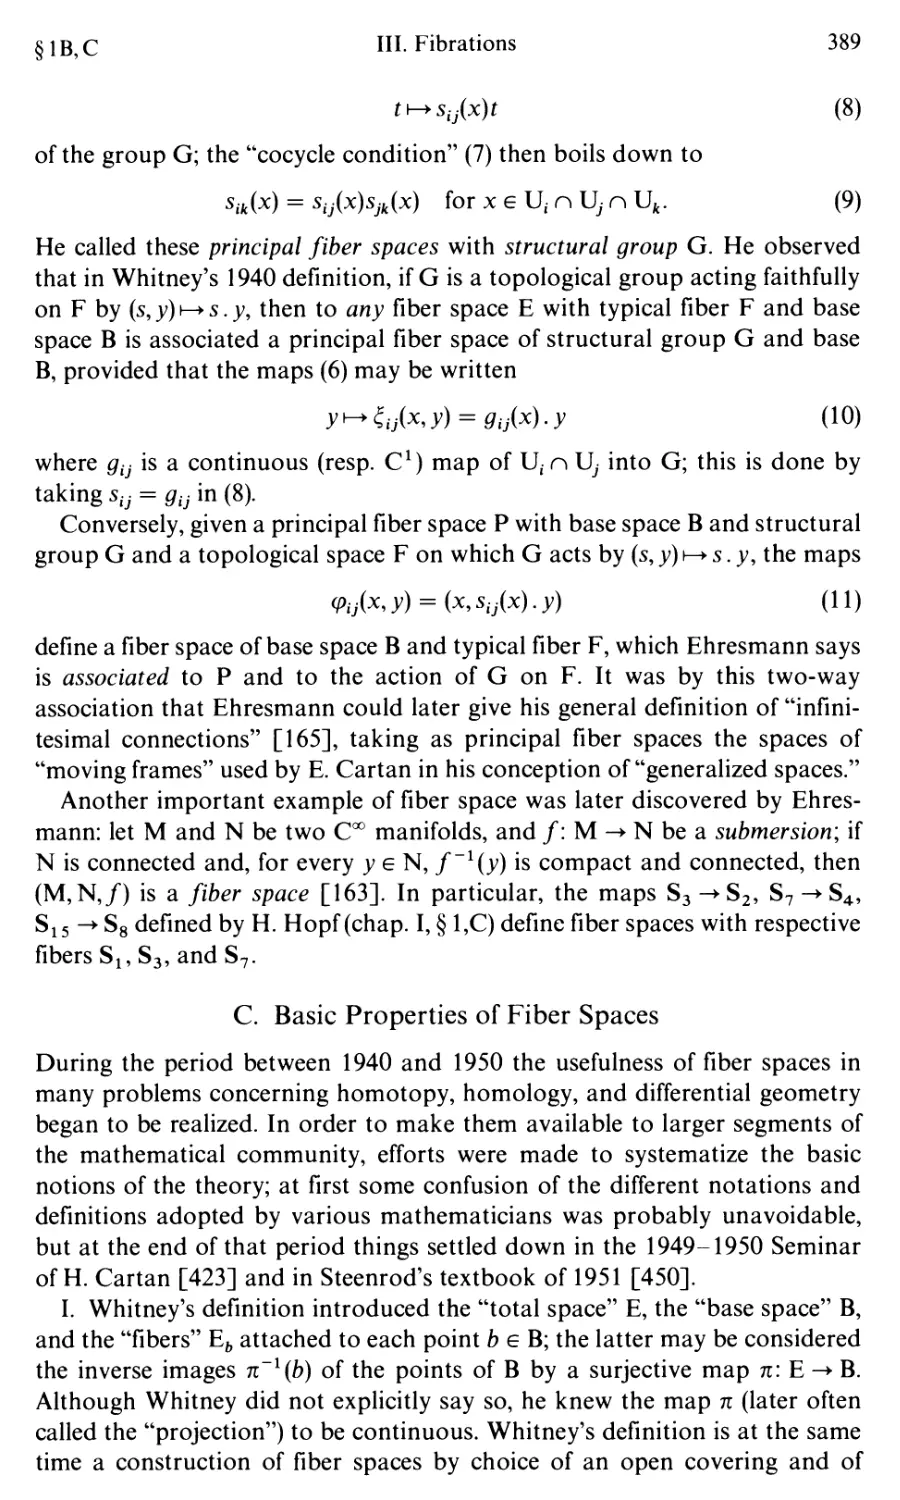 C. Basic Properties of Fiber Spaces